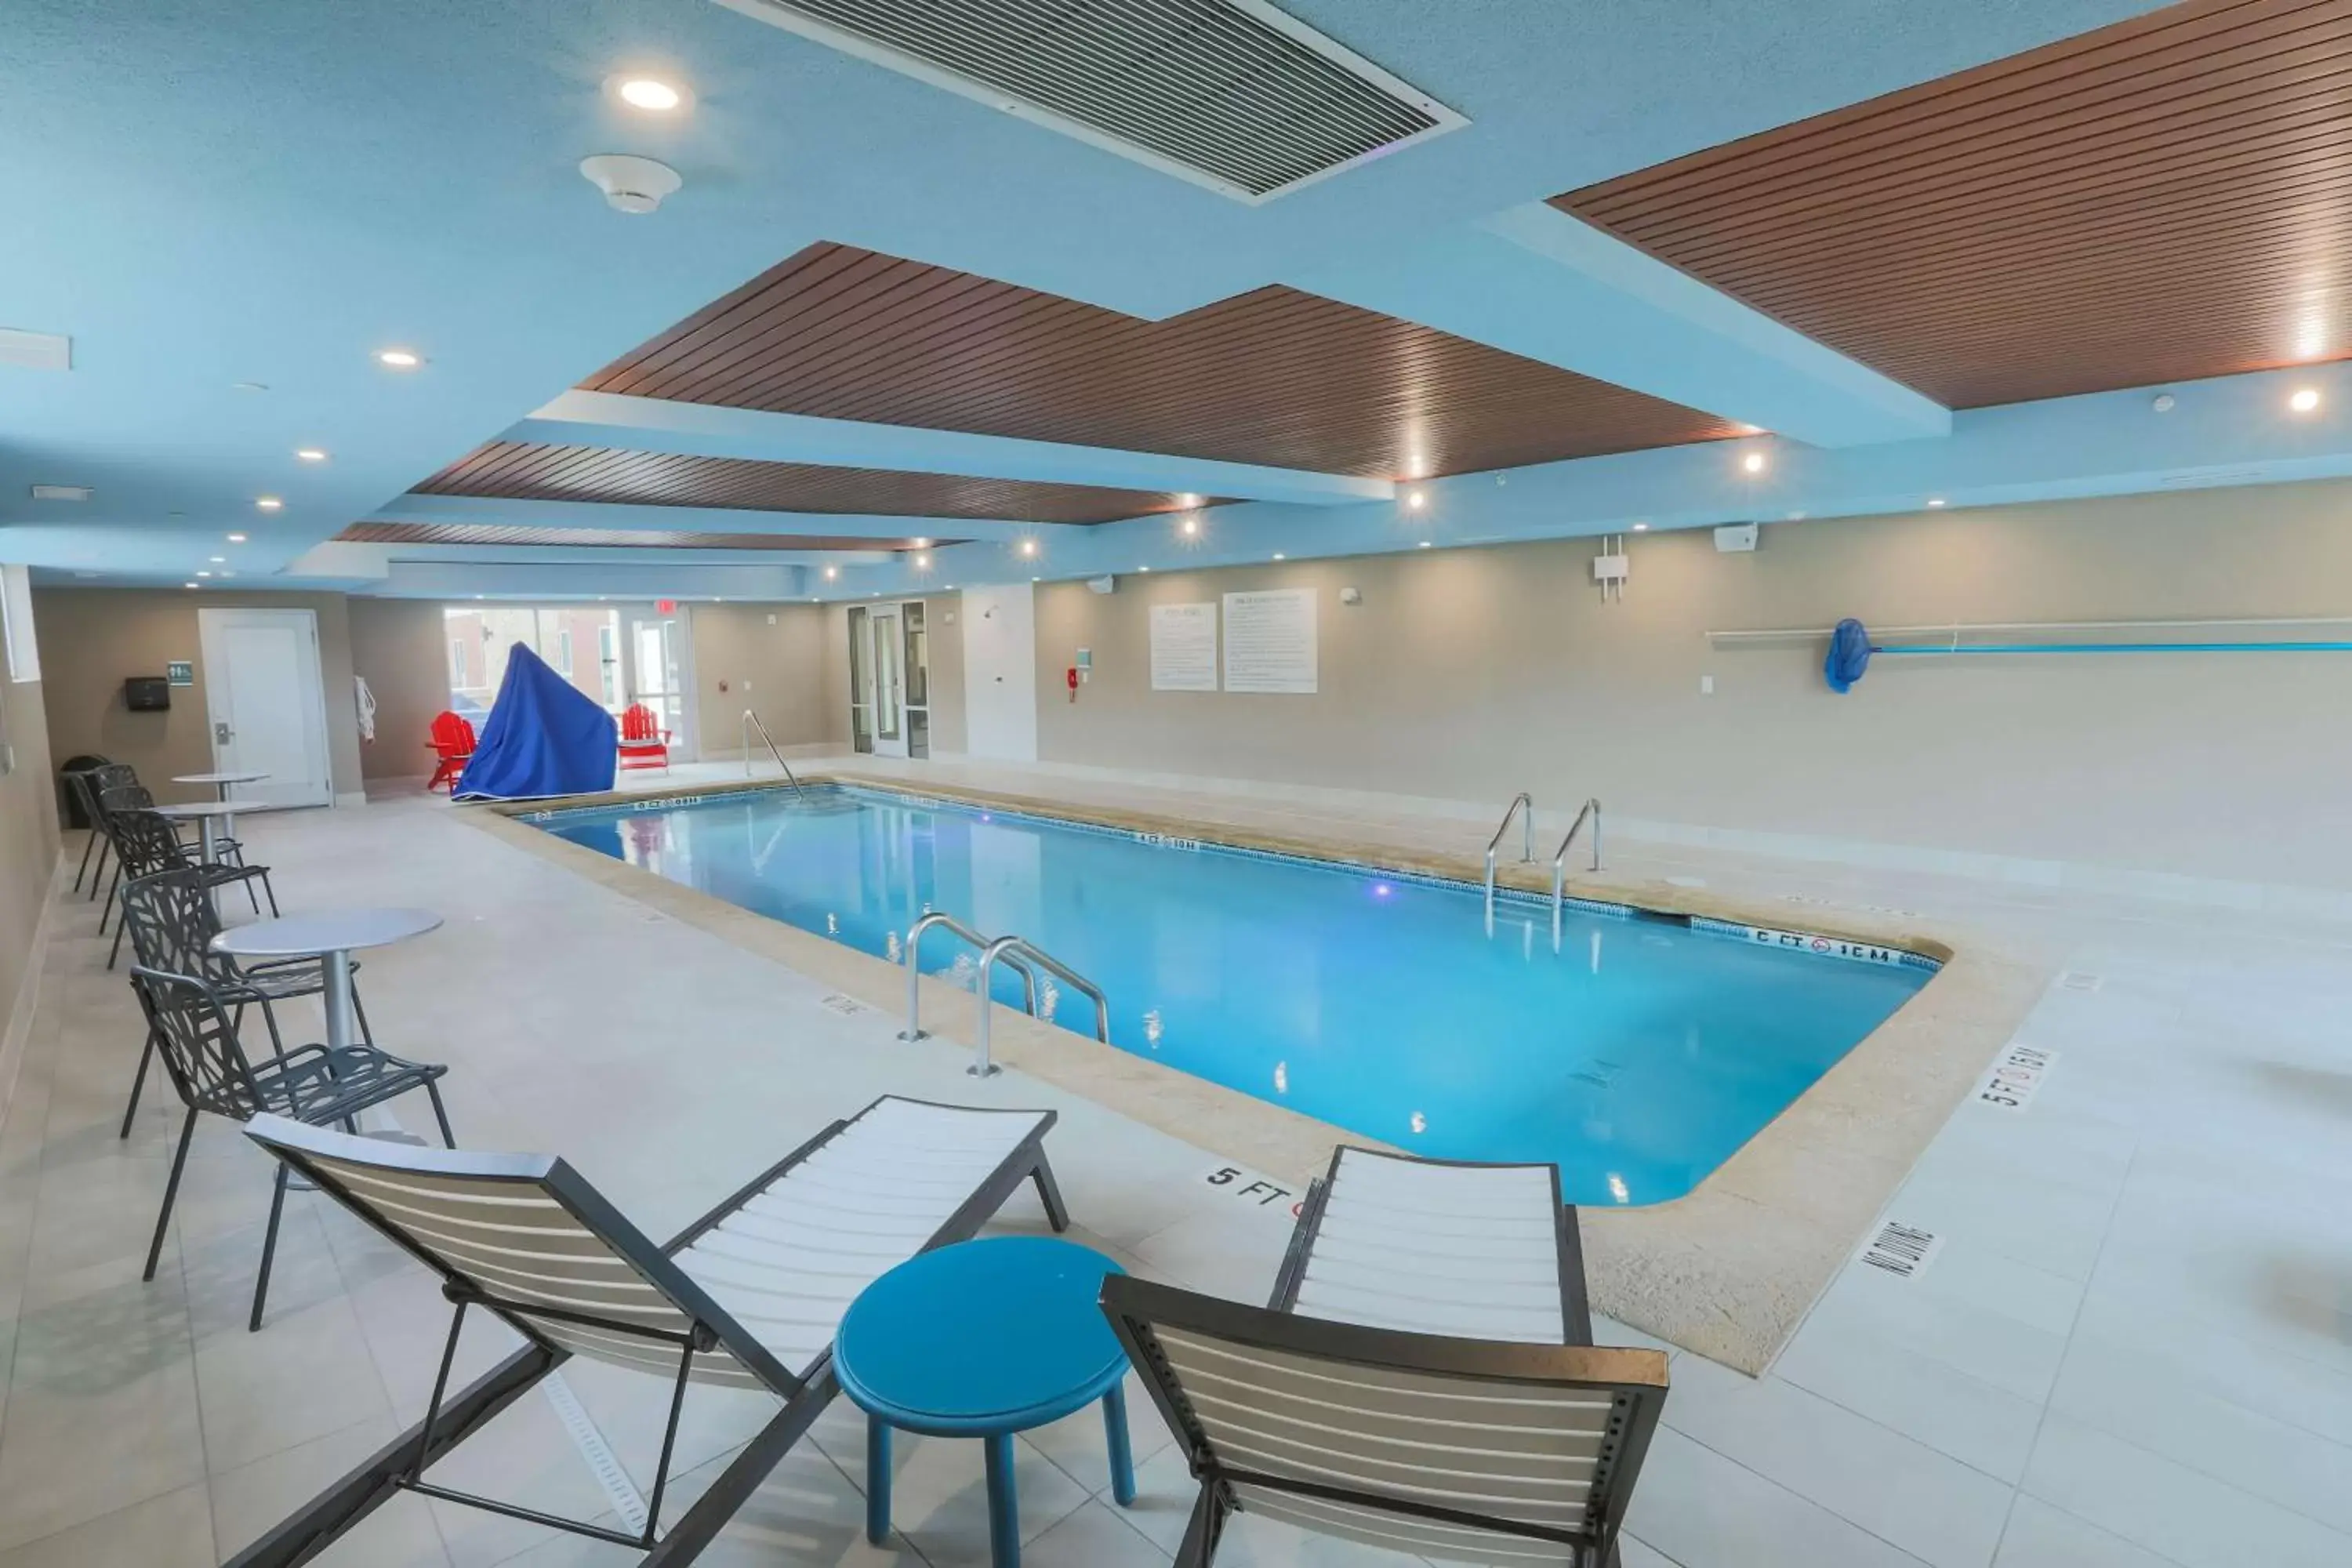 Swimming Pool in Home2 Suites By Hilton Cumming Atlanta, Ga